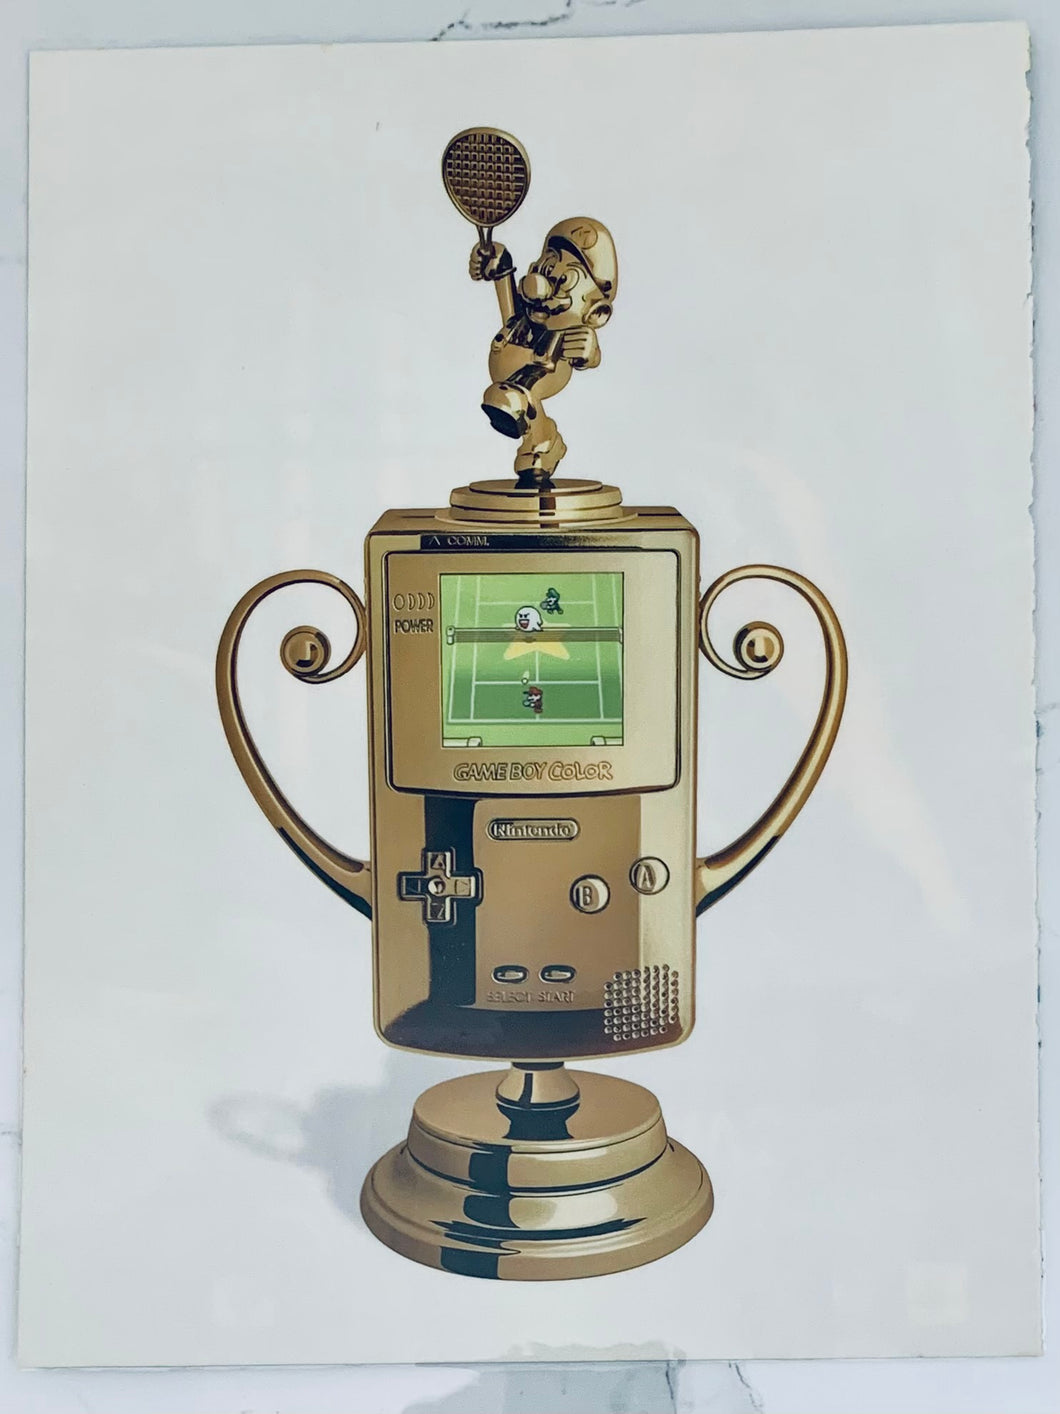 Mario Tennis - GBC - Original Vintage Advertisement - Print Ads - Laminated A4 Poster